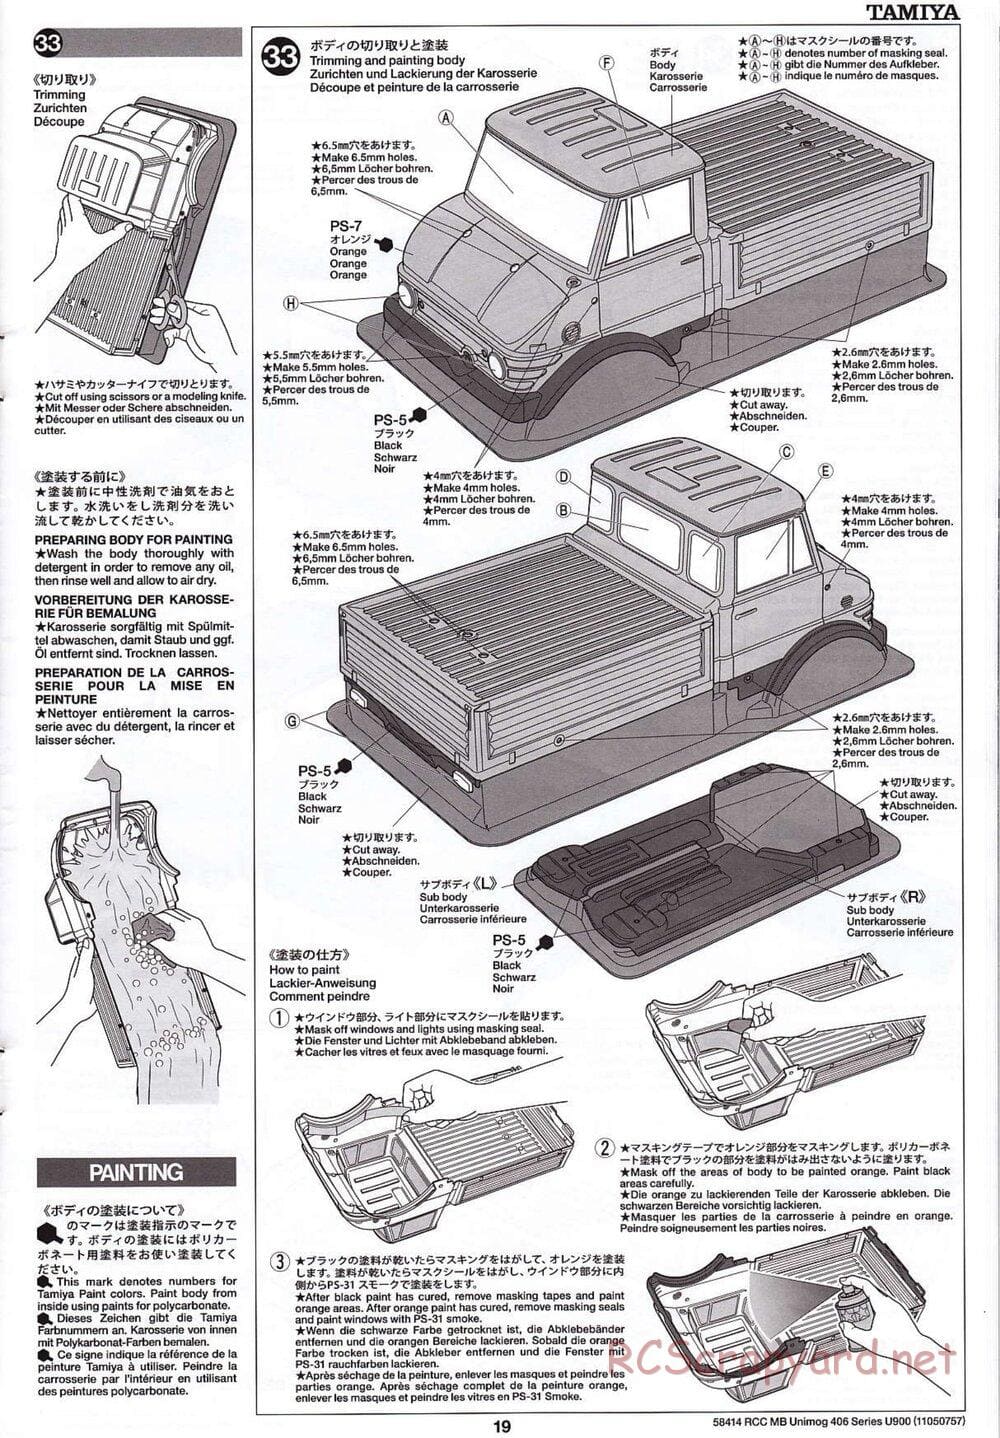 Tamiya - Mercedes-Benz Unimog 406 Series U900 - CR-01 Chassis - Manual - Page 19